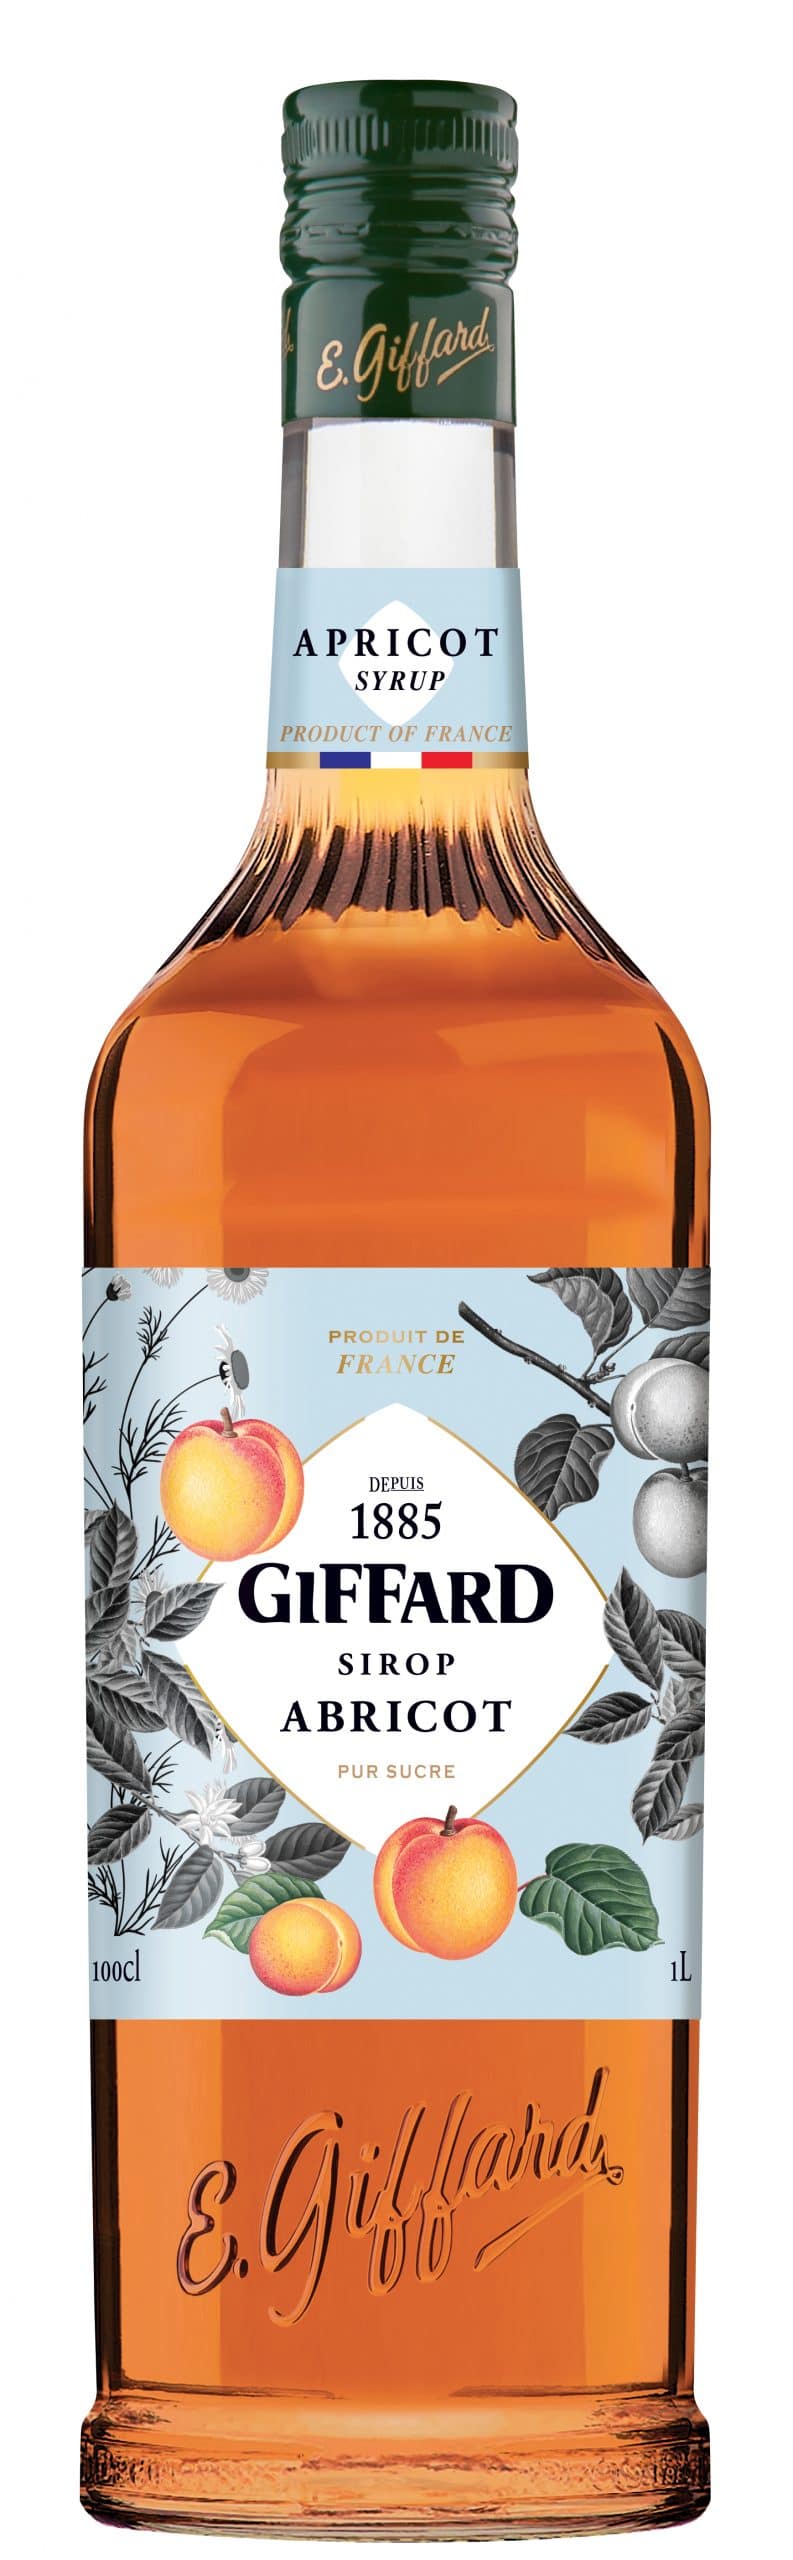 Giffard Apricot Syrup